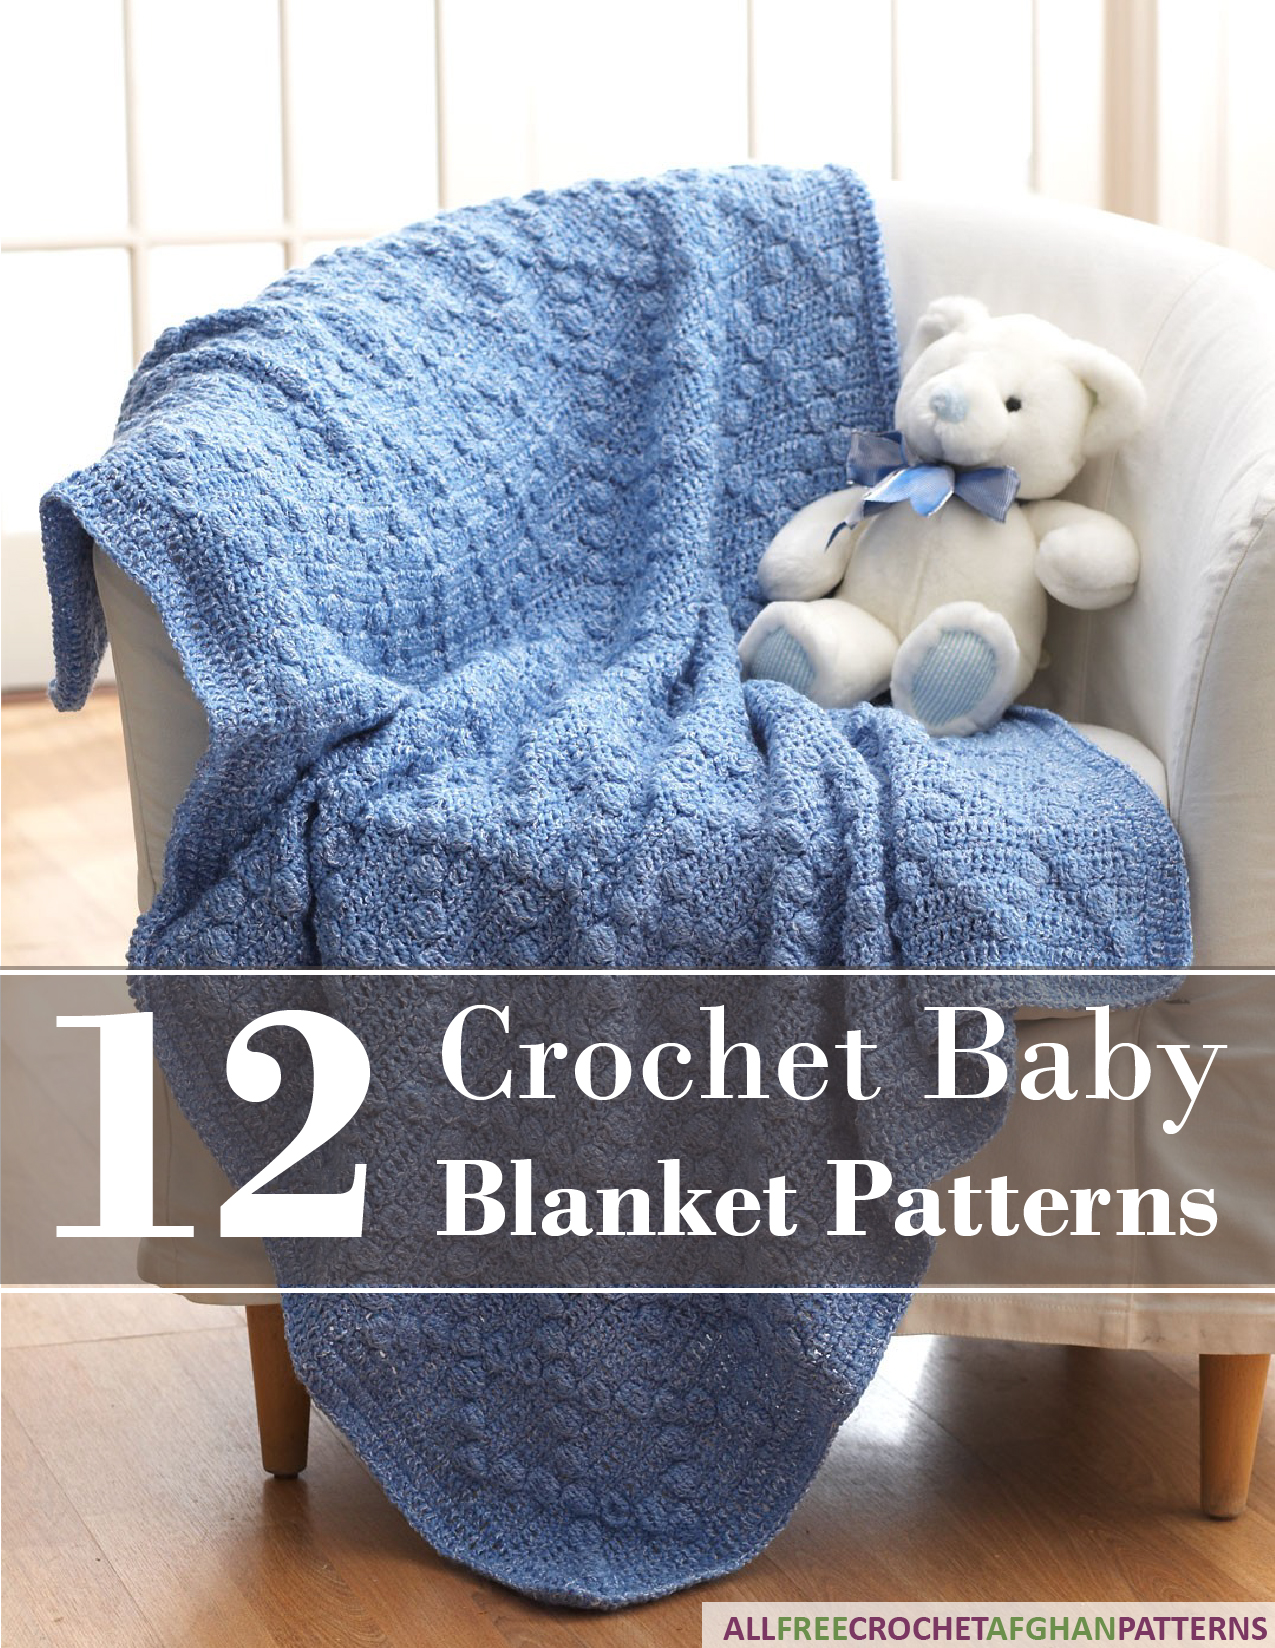 12 Crochet Baby Blanket Patterns